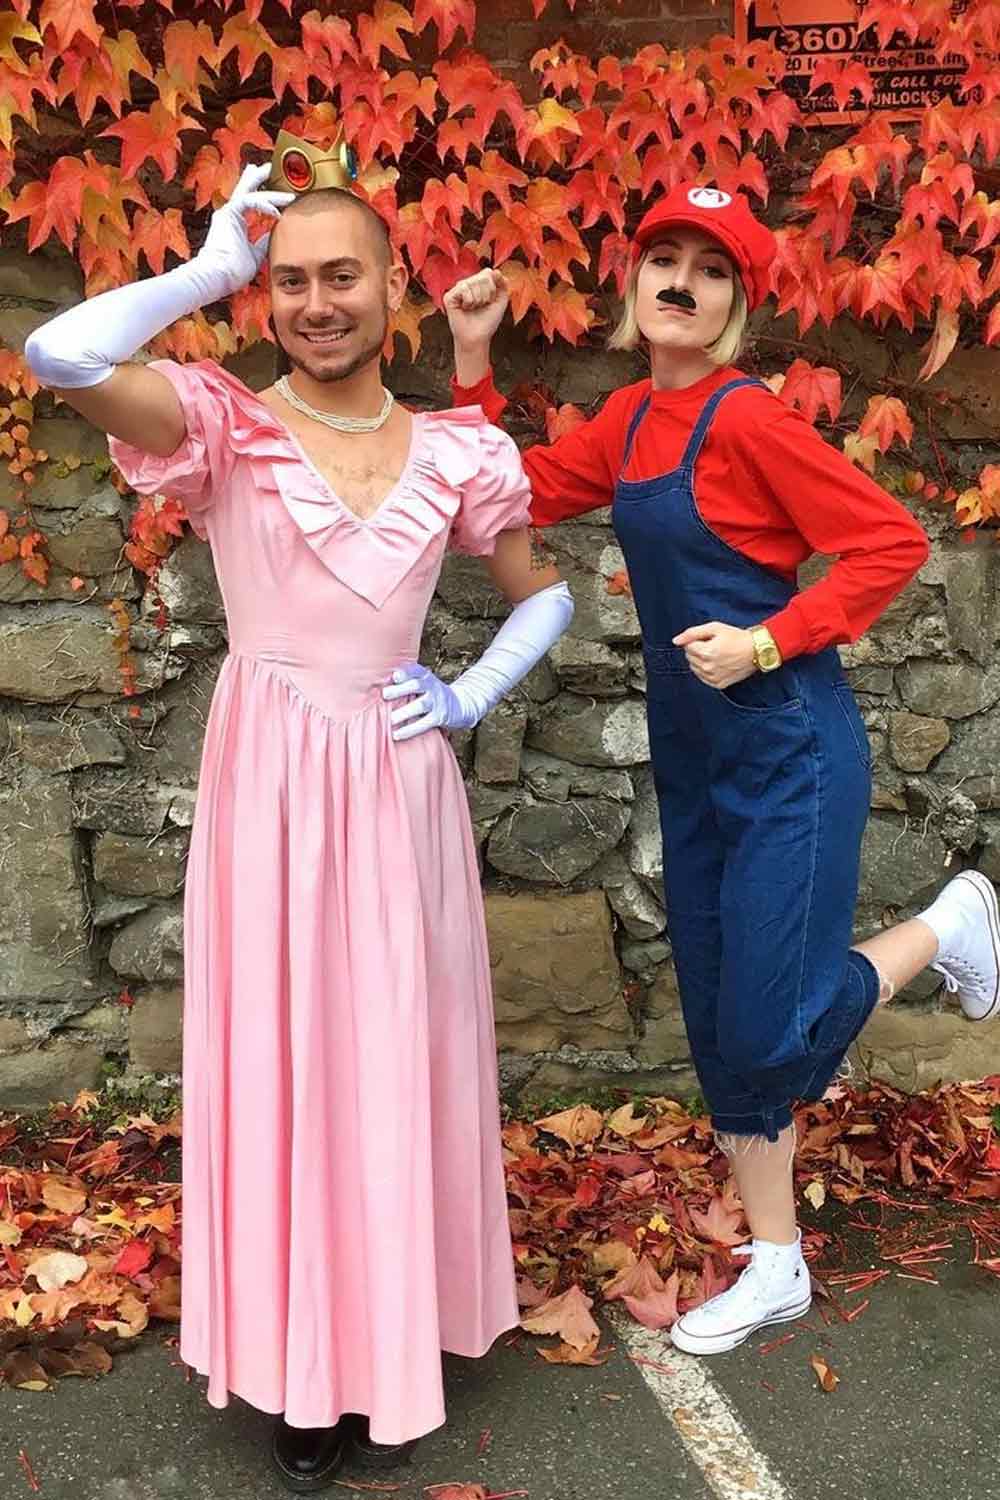 Mario and the Princess Halloween Costumes